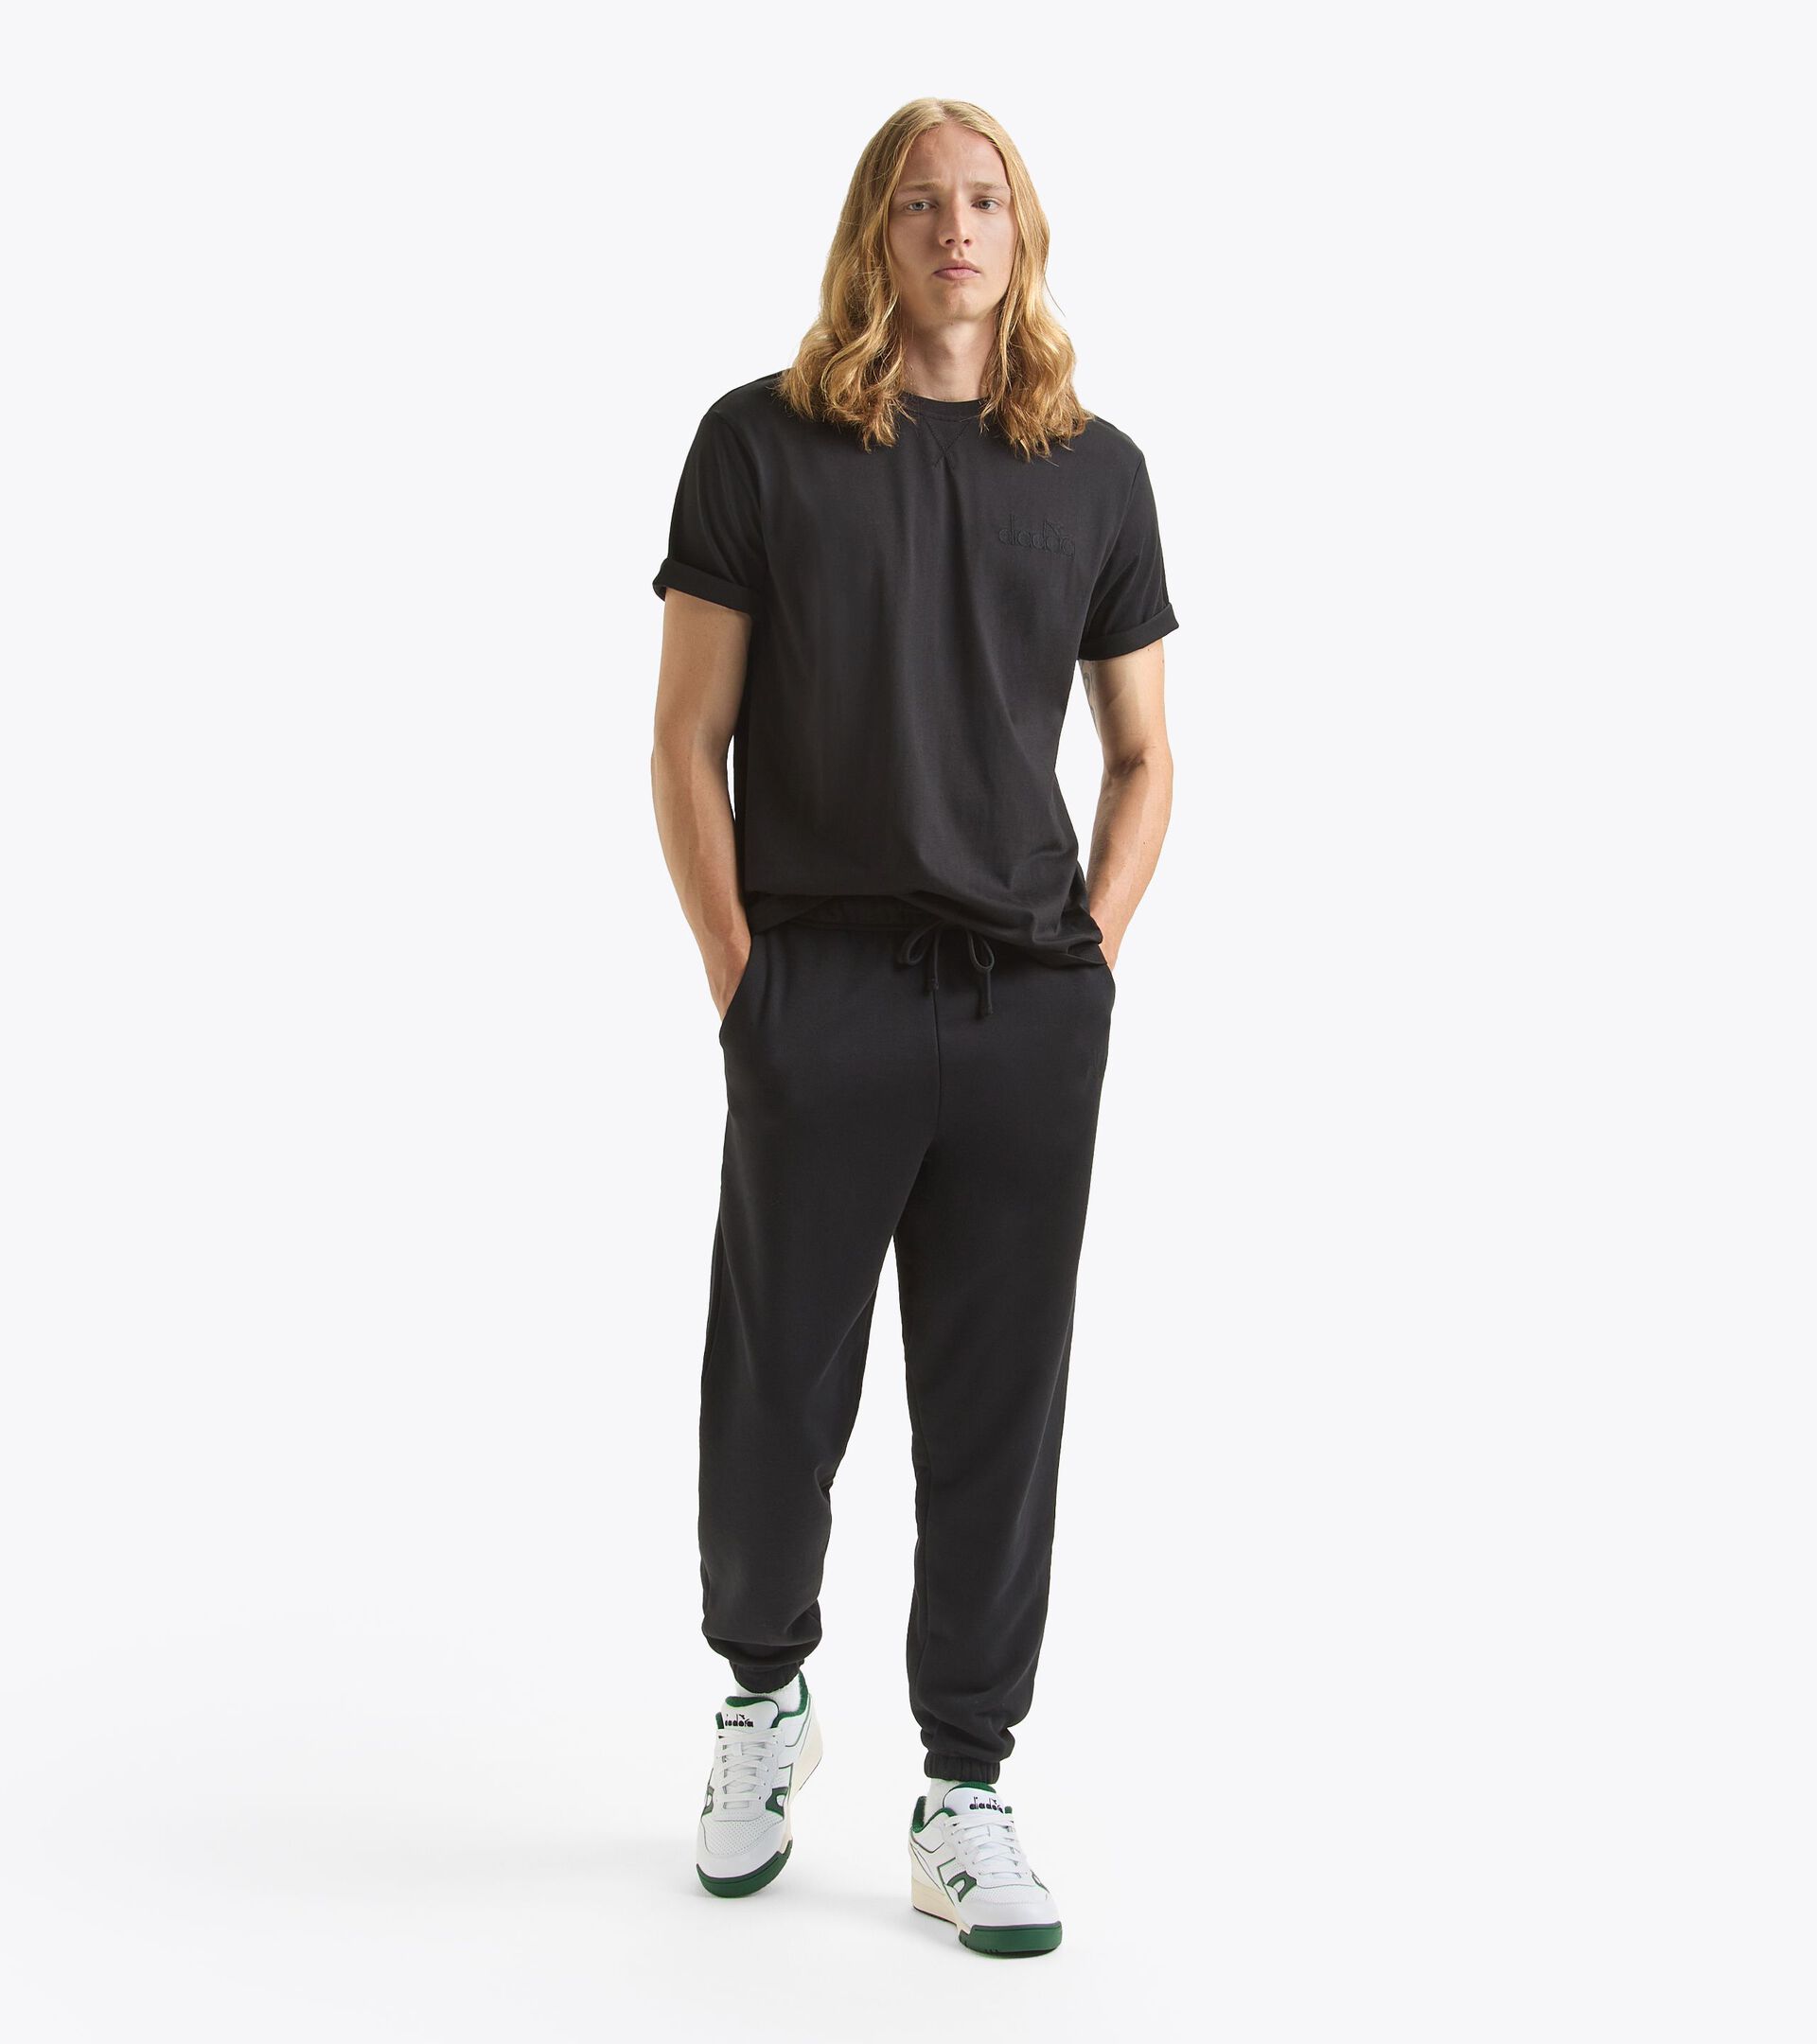 Jogger pants - Gender Neutral PANT ATHL. LOGO BLACK - Diadora